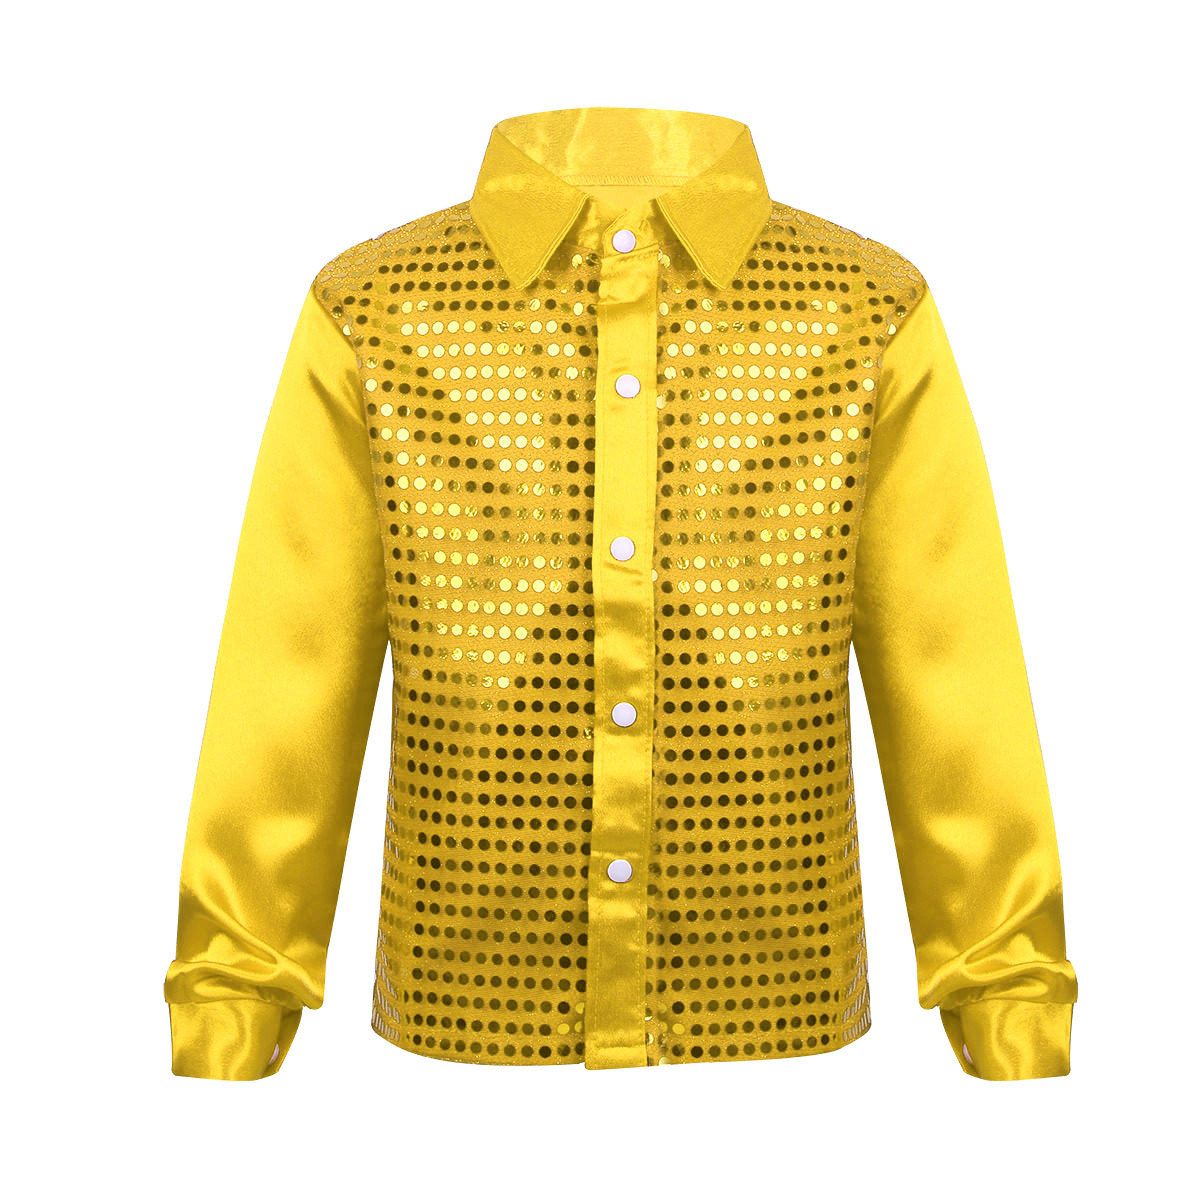 YiZYiF Kids Boys Long Sleeve Tops Shiny Sequined Shirt Jazz Dance Costume - image 1 of 7